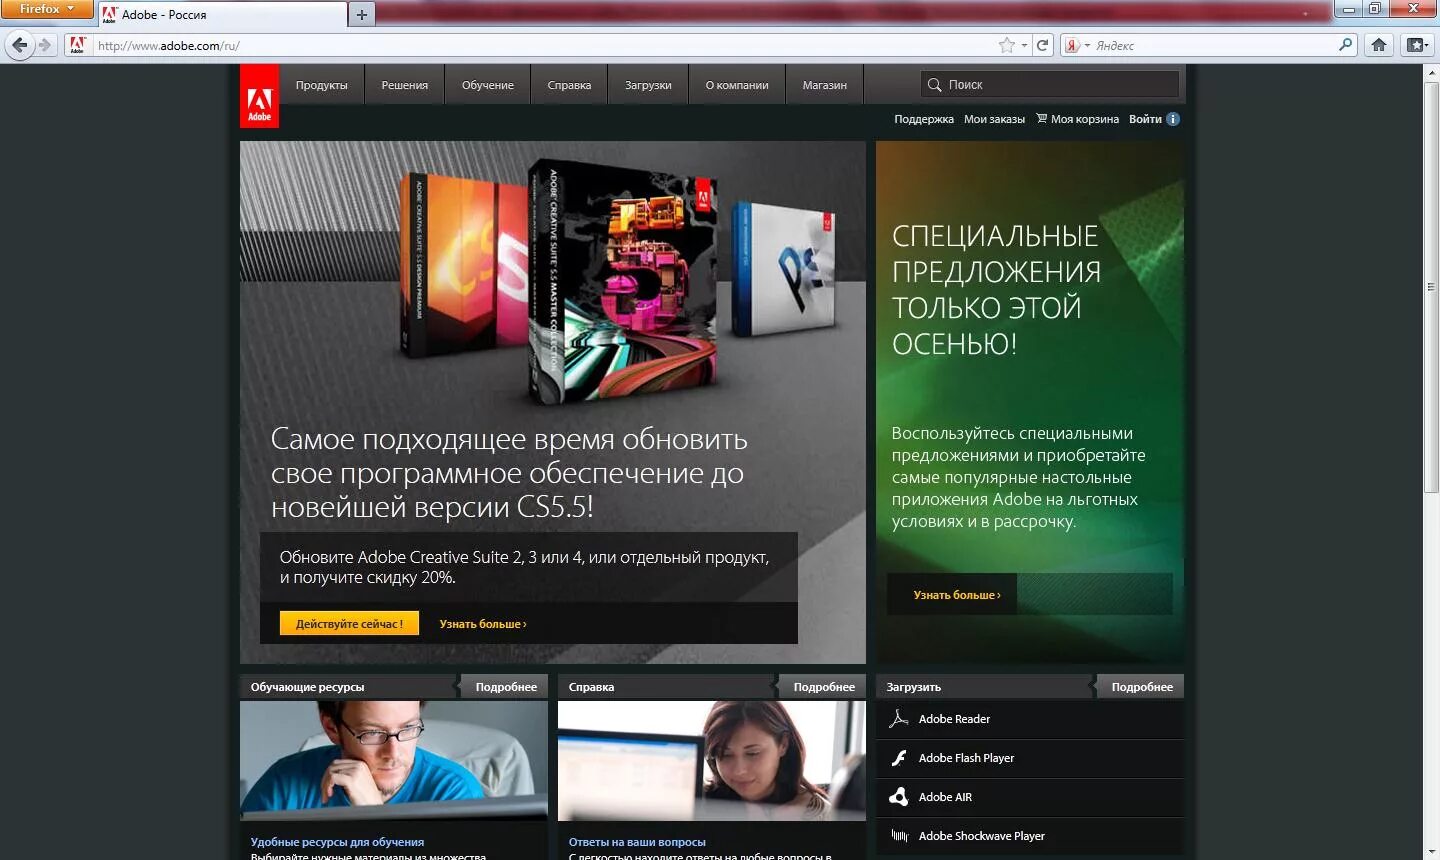 Adobe. Adobe для сайтов. Adobe в России. Adobe ru. Сайт adobe com